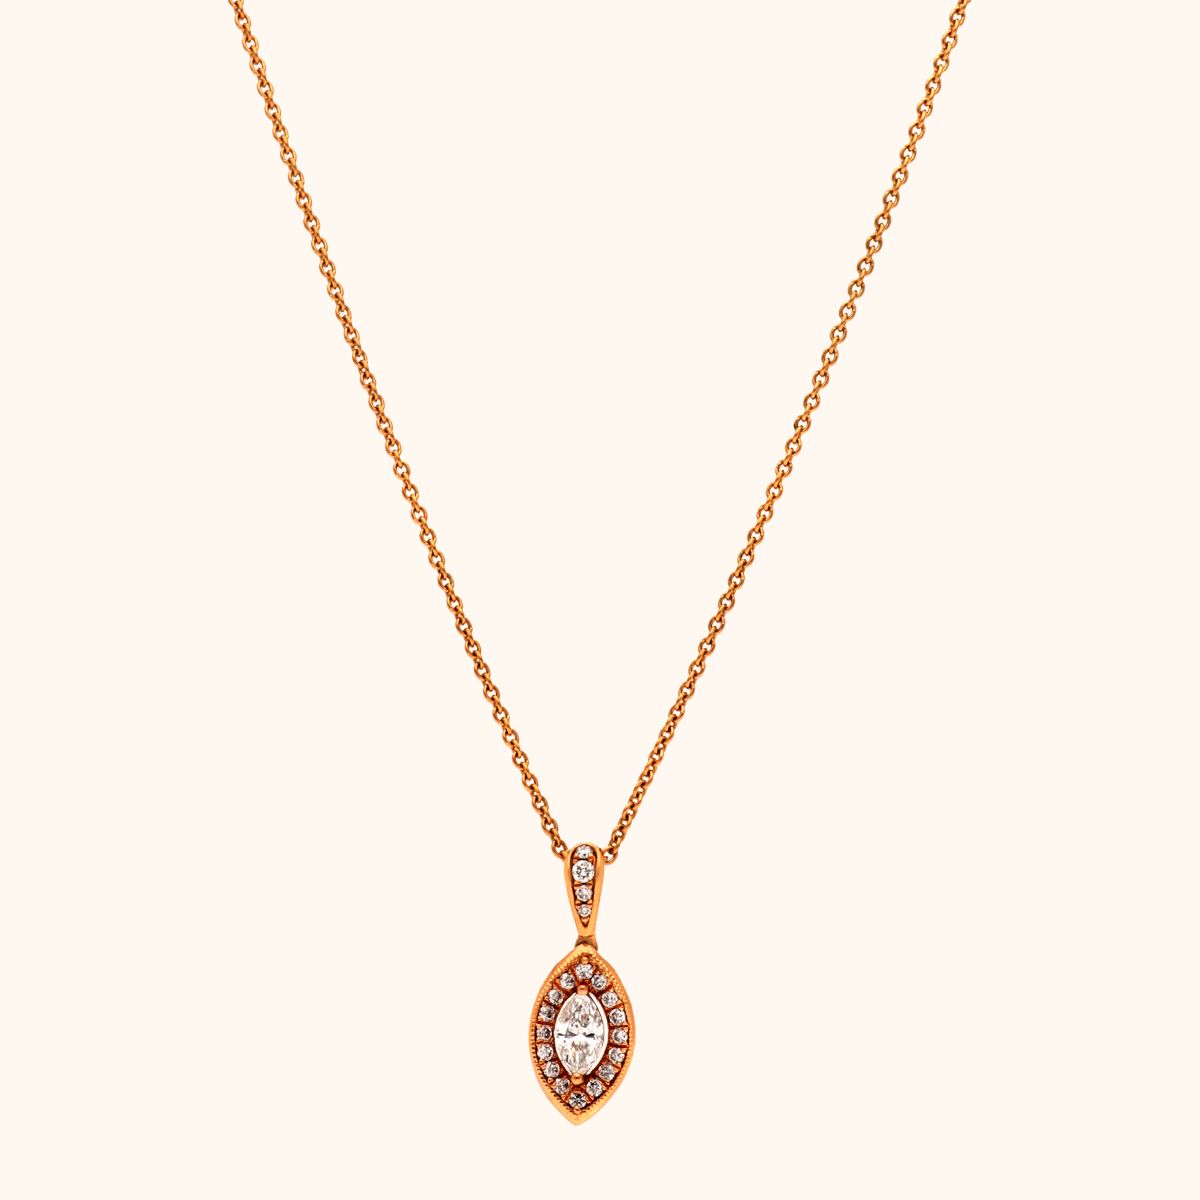 18 KT Diamond Pendant with chain